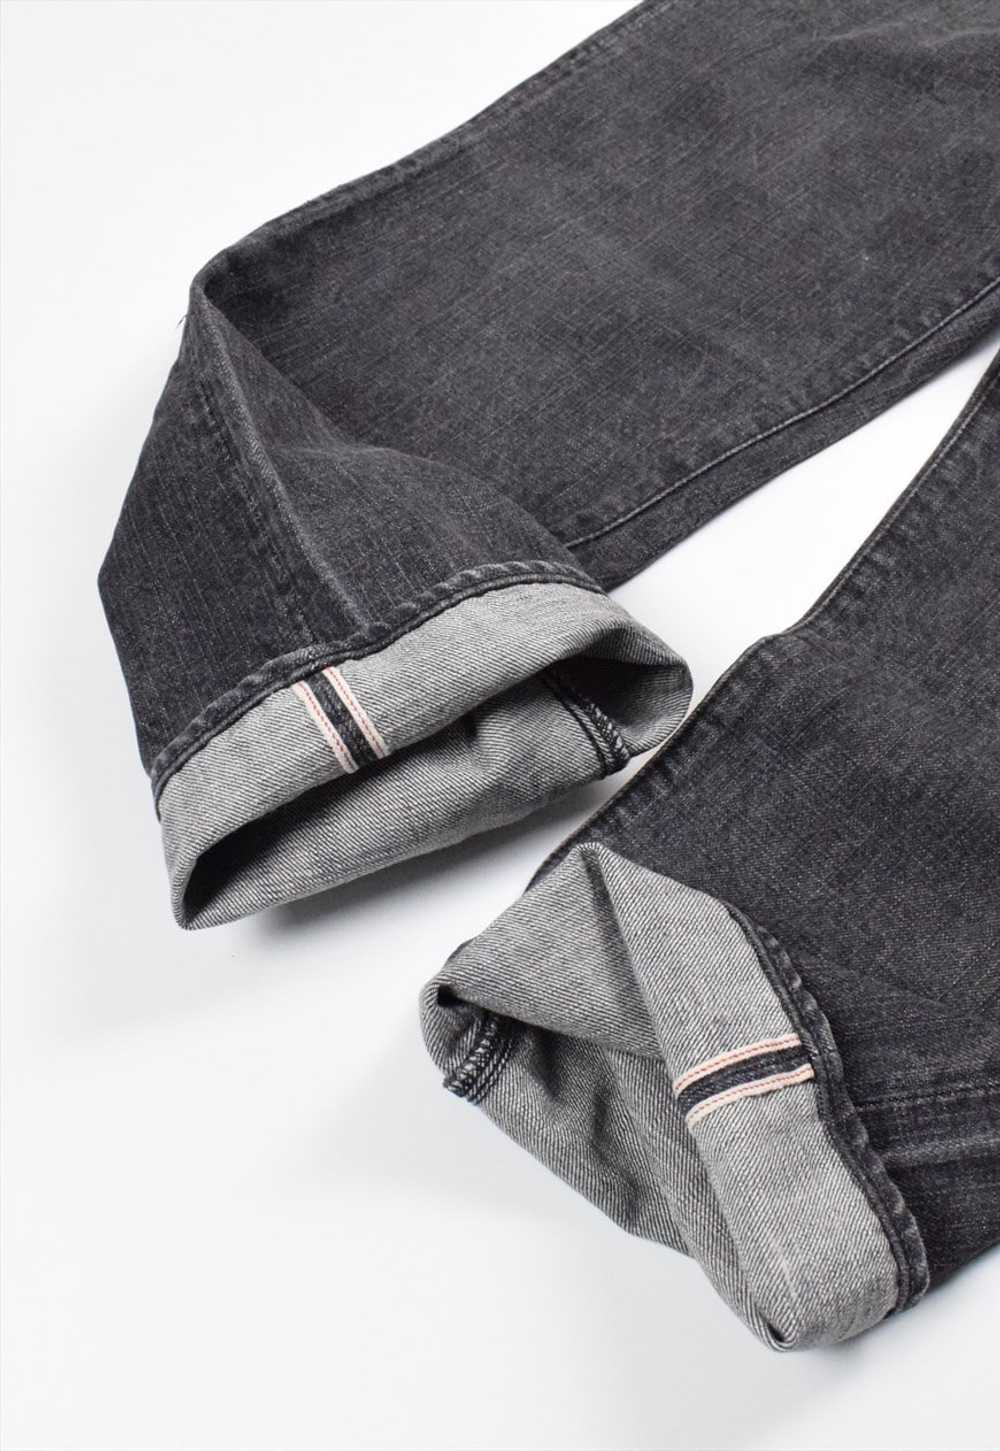 Vintage Evisu Yamane Selvedge Denim Jeans in Grey - image 5